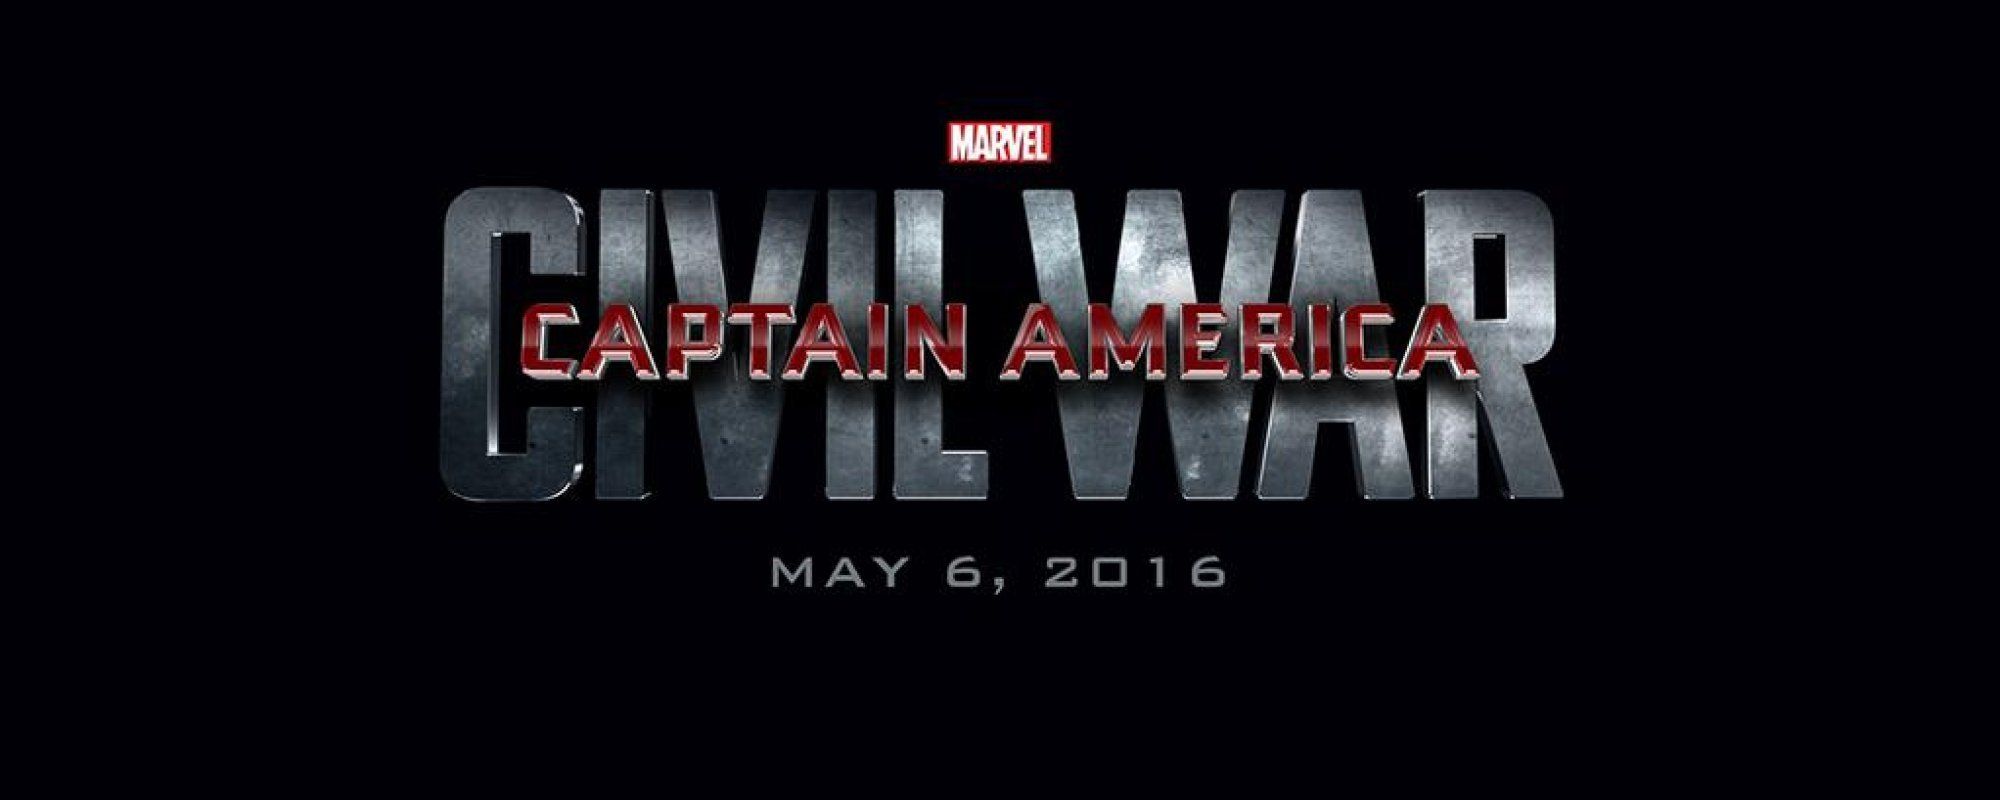 Anthony Mackie : Captain America Civil War sera un Avengers 3.8